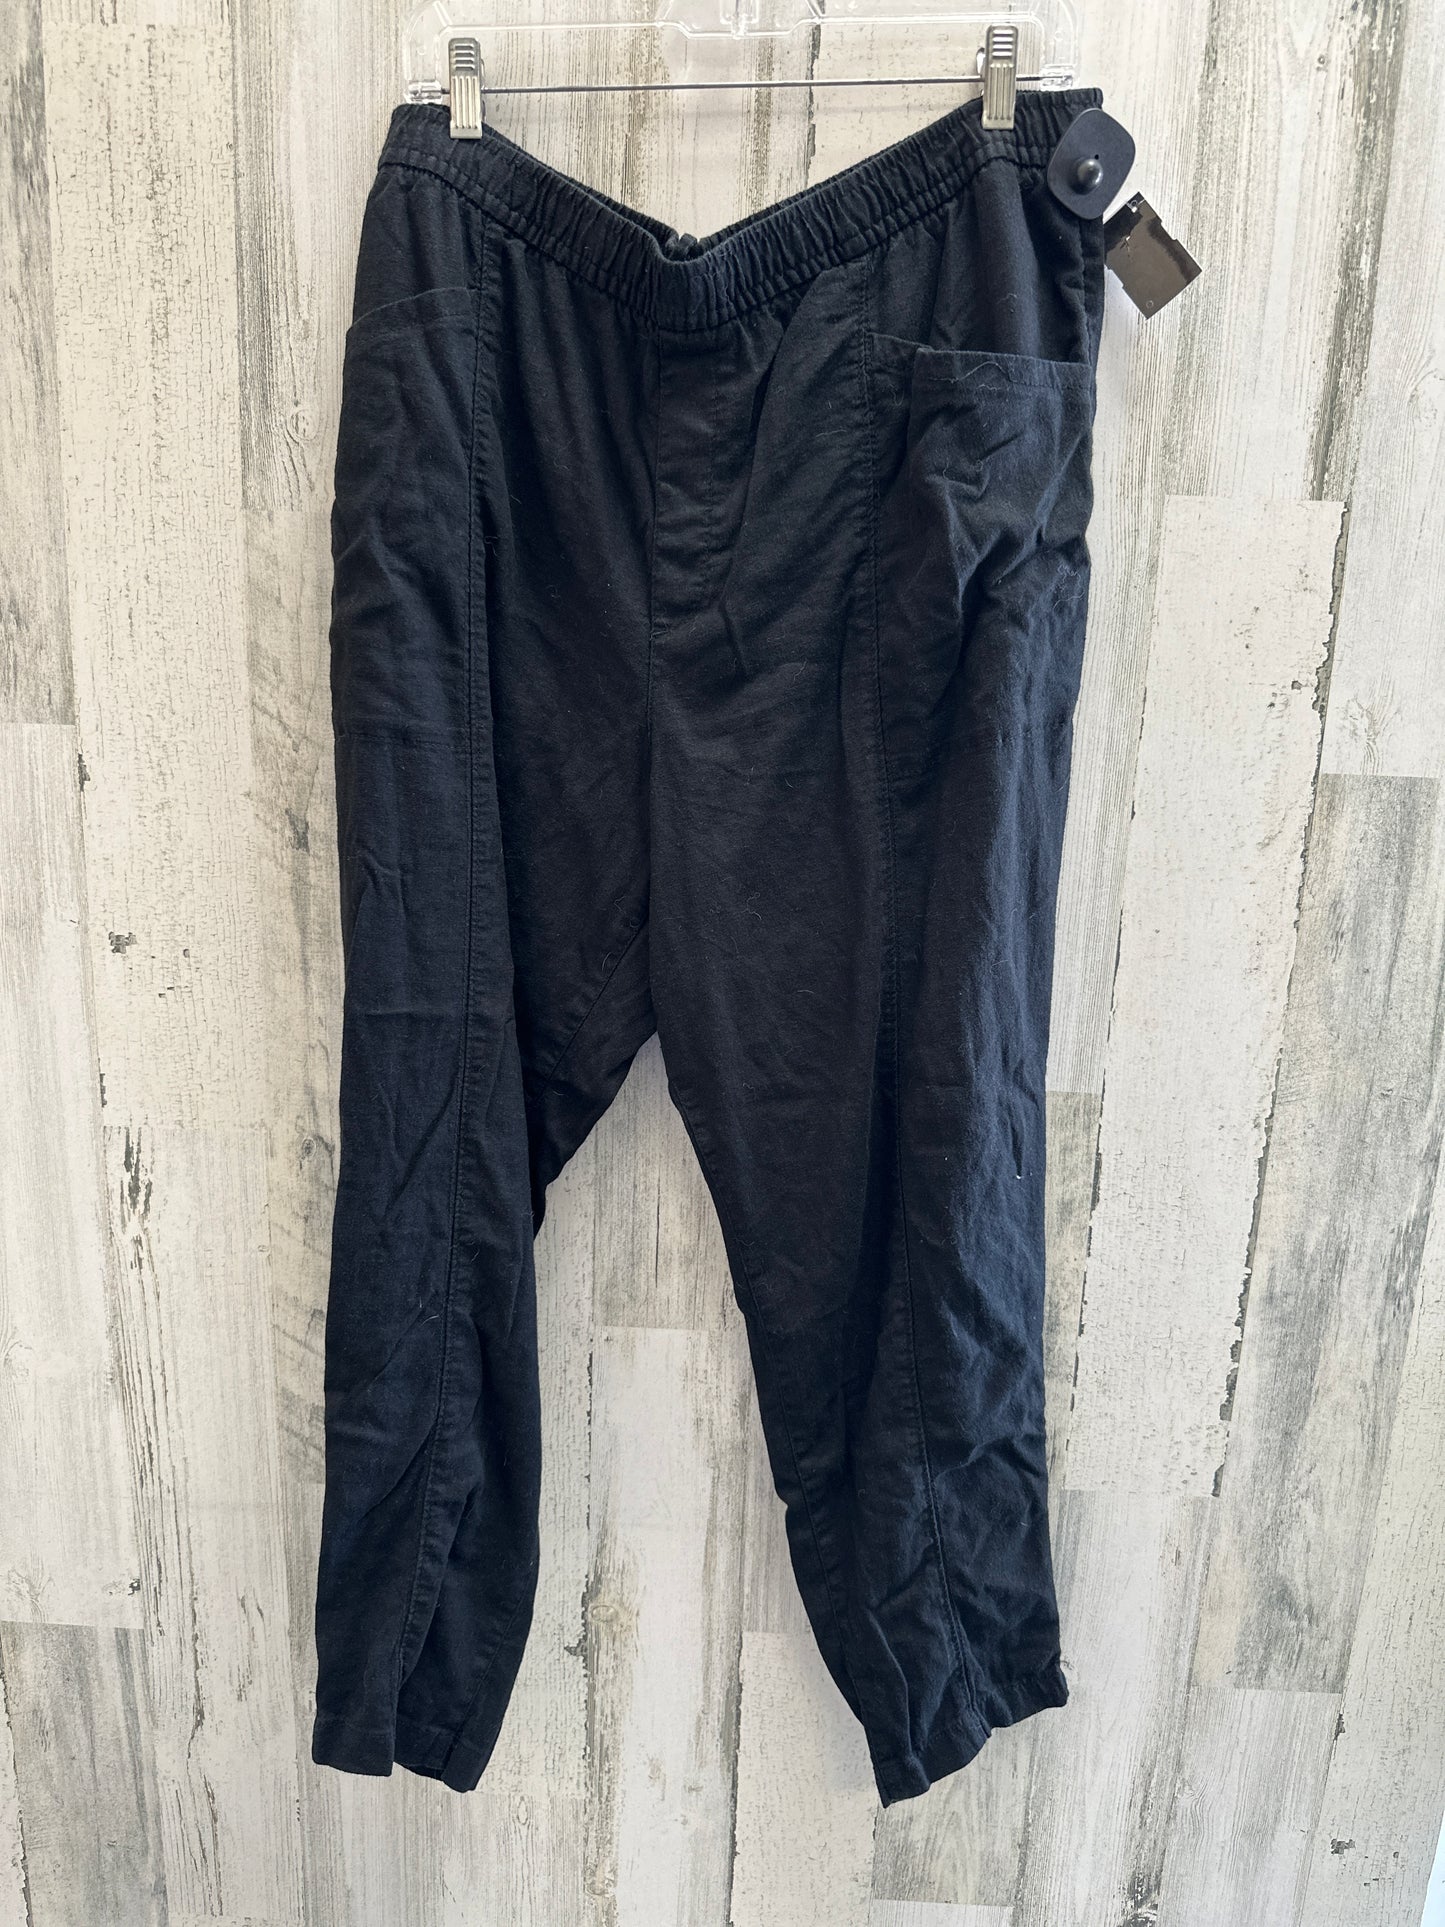 Black Pants Linen Old Navy, Size 14